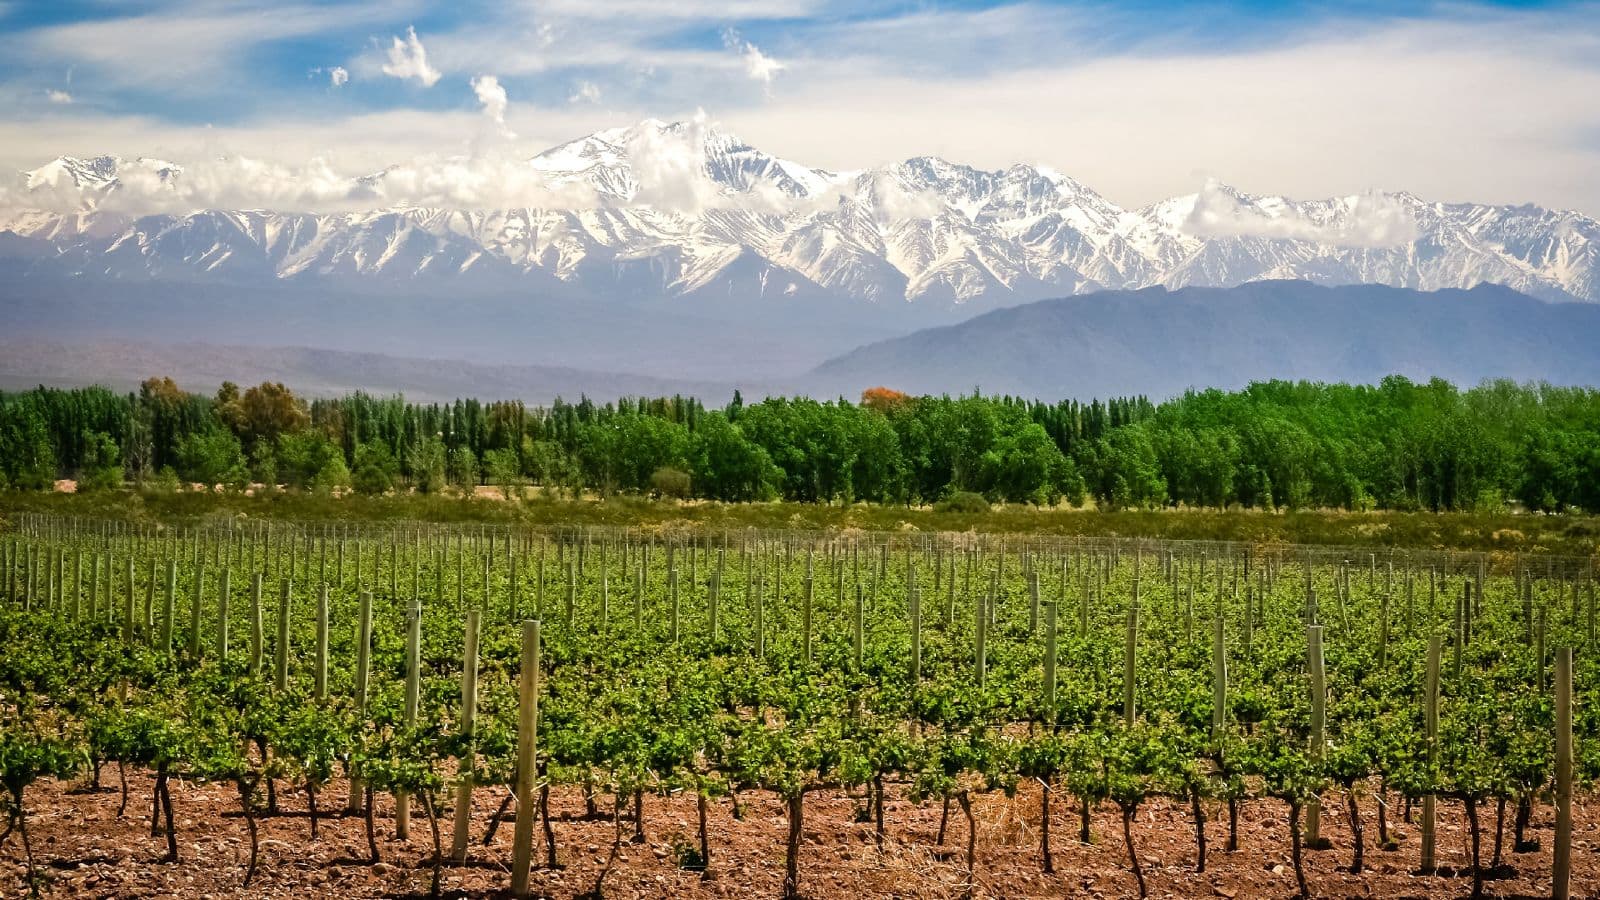 Take a journey through Mendoza, Argentina's popular vineyards